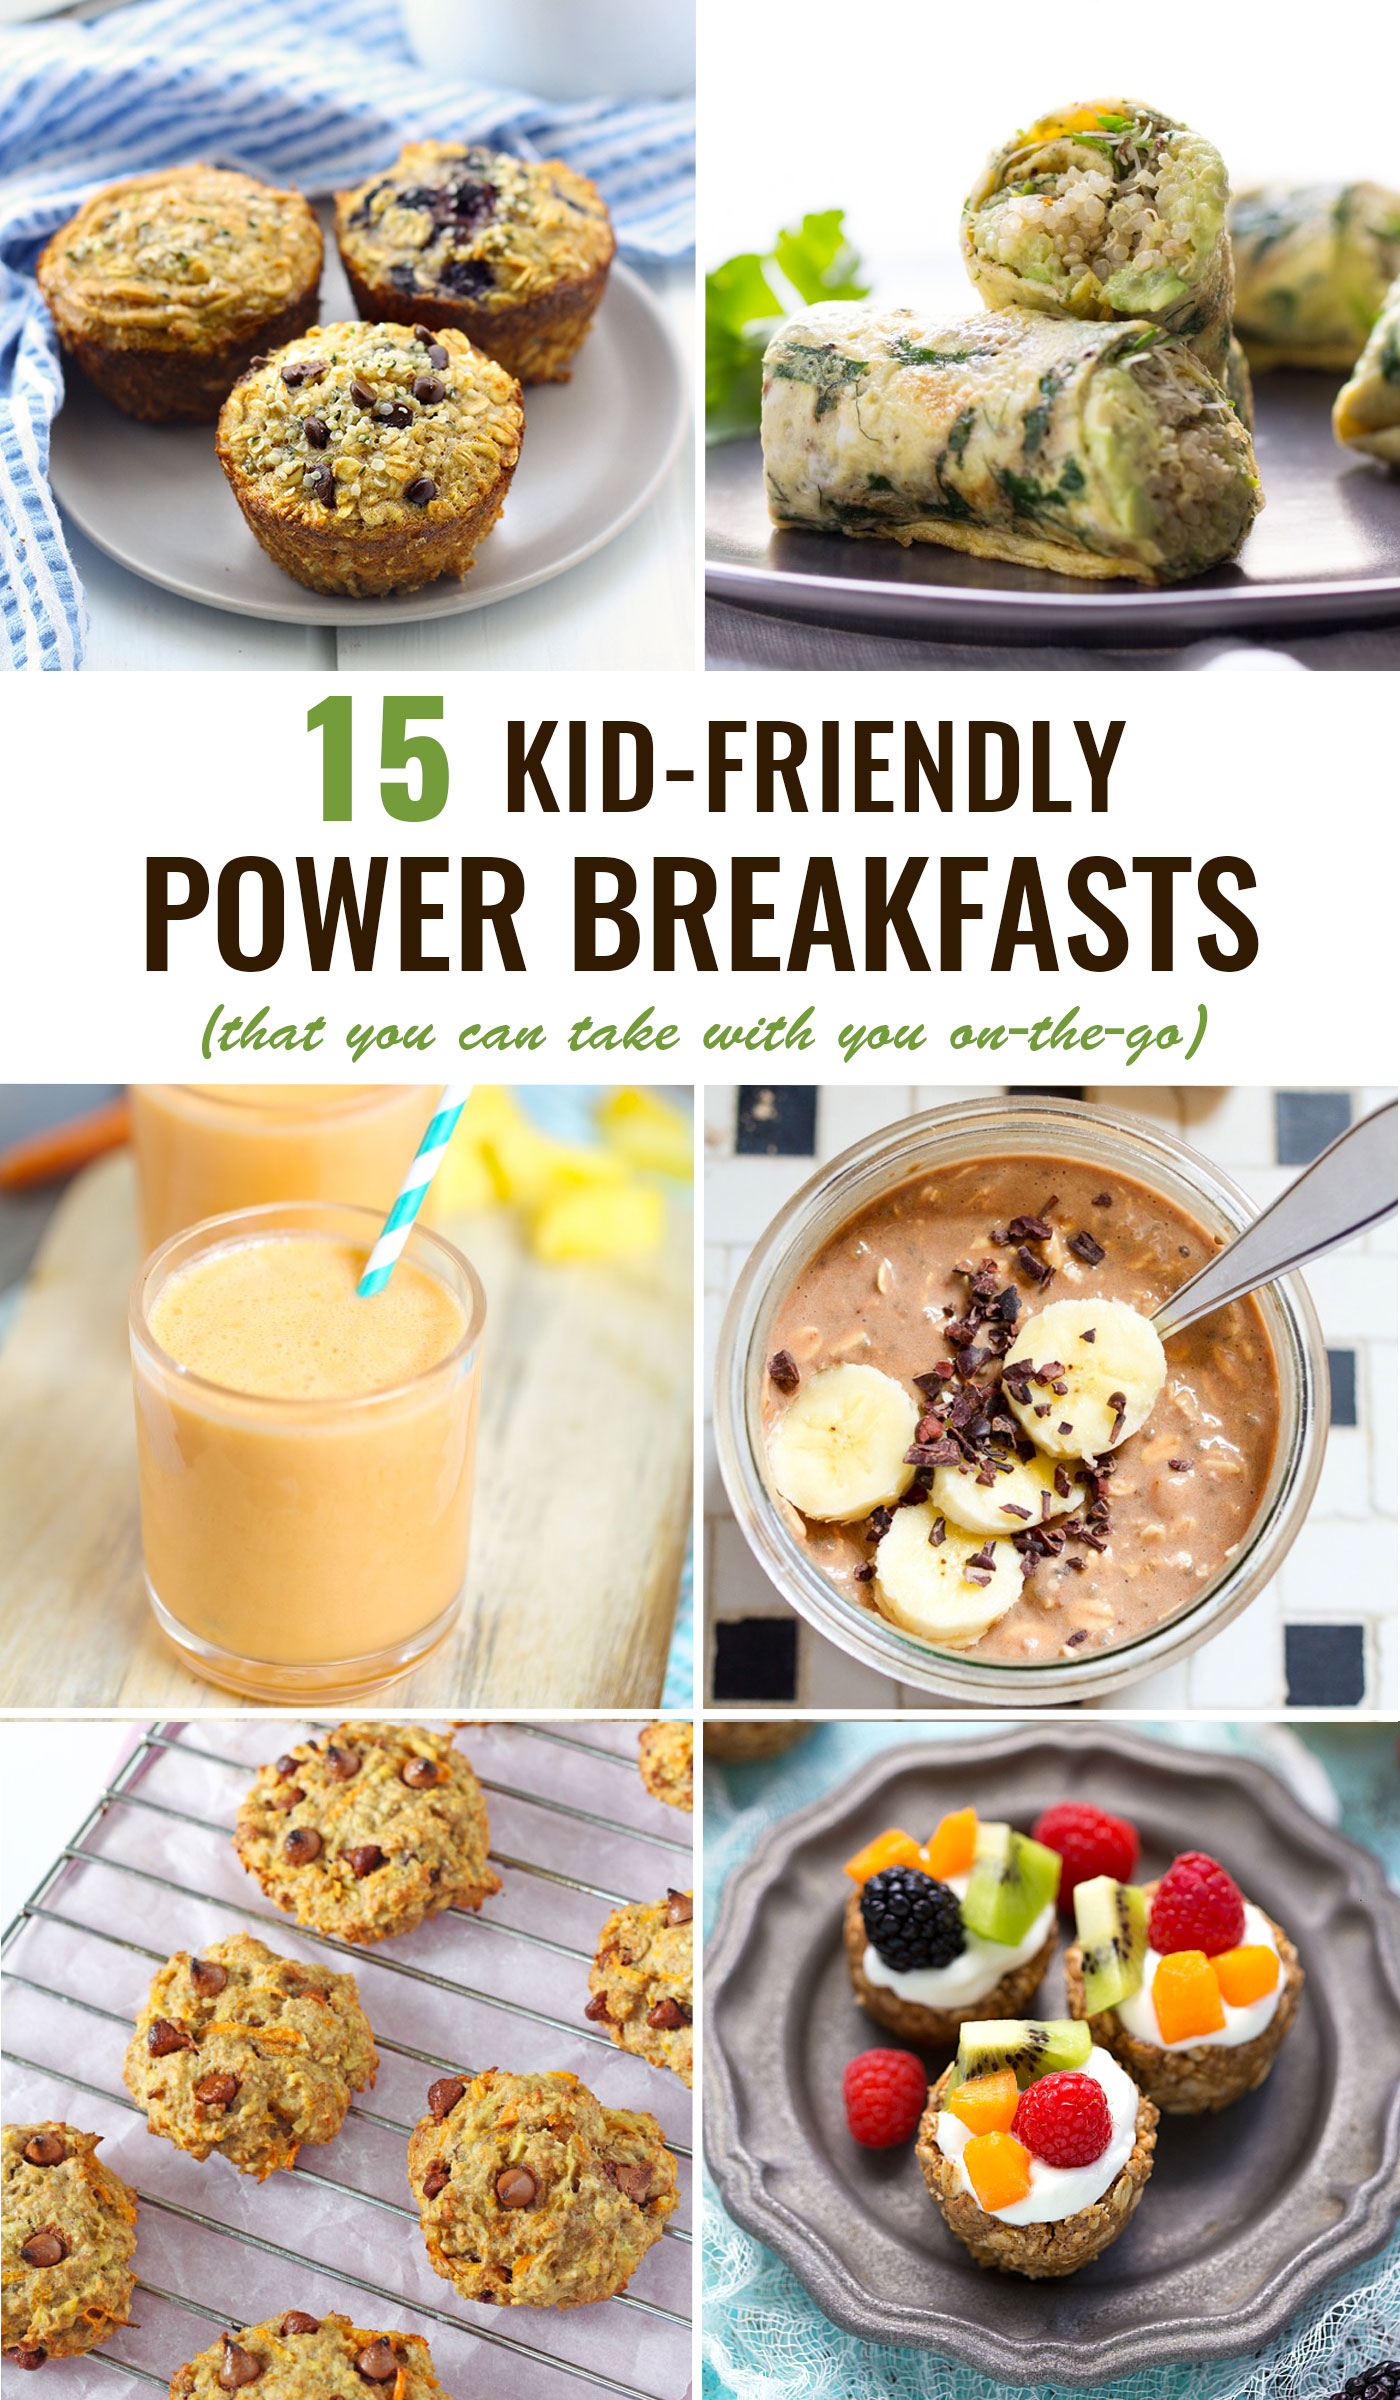 Kid-Friendly Power Breakfasts To Go | Healthy Ideas for Kids